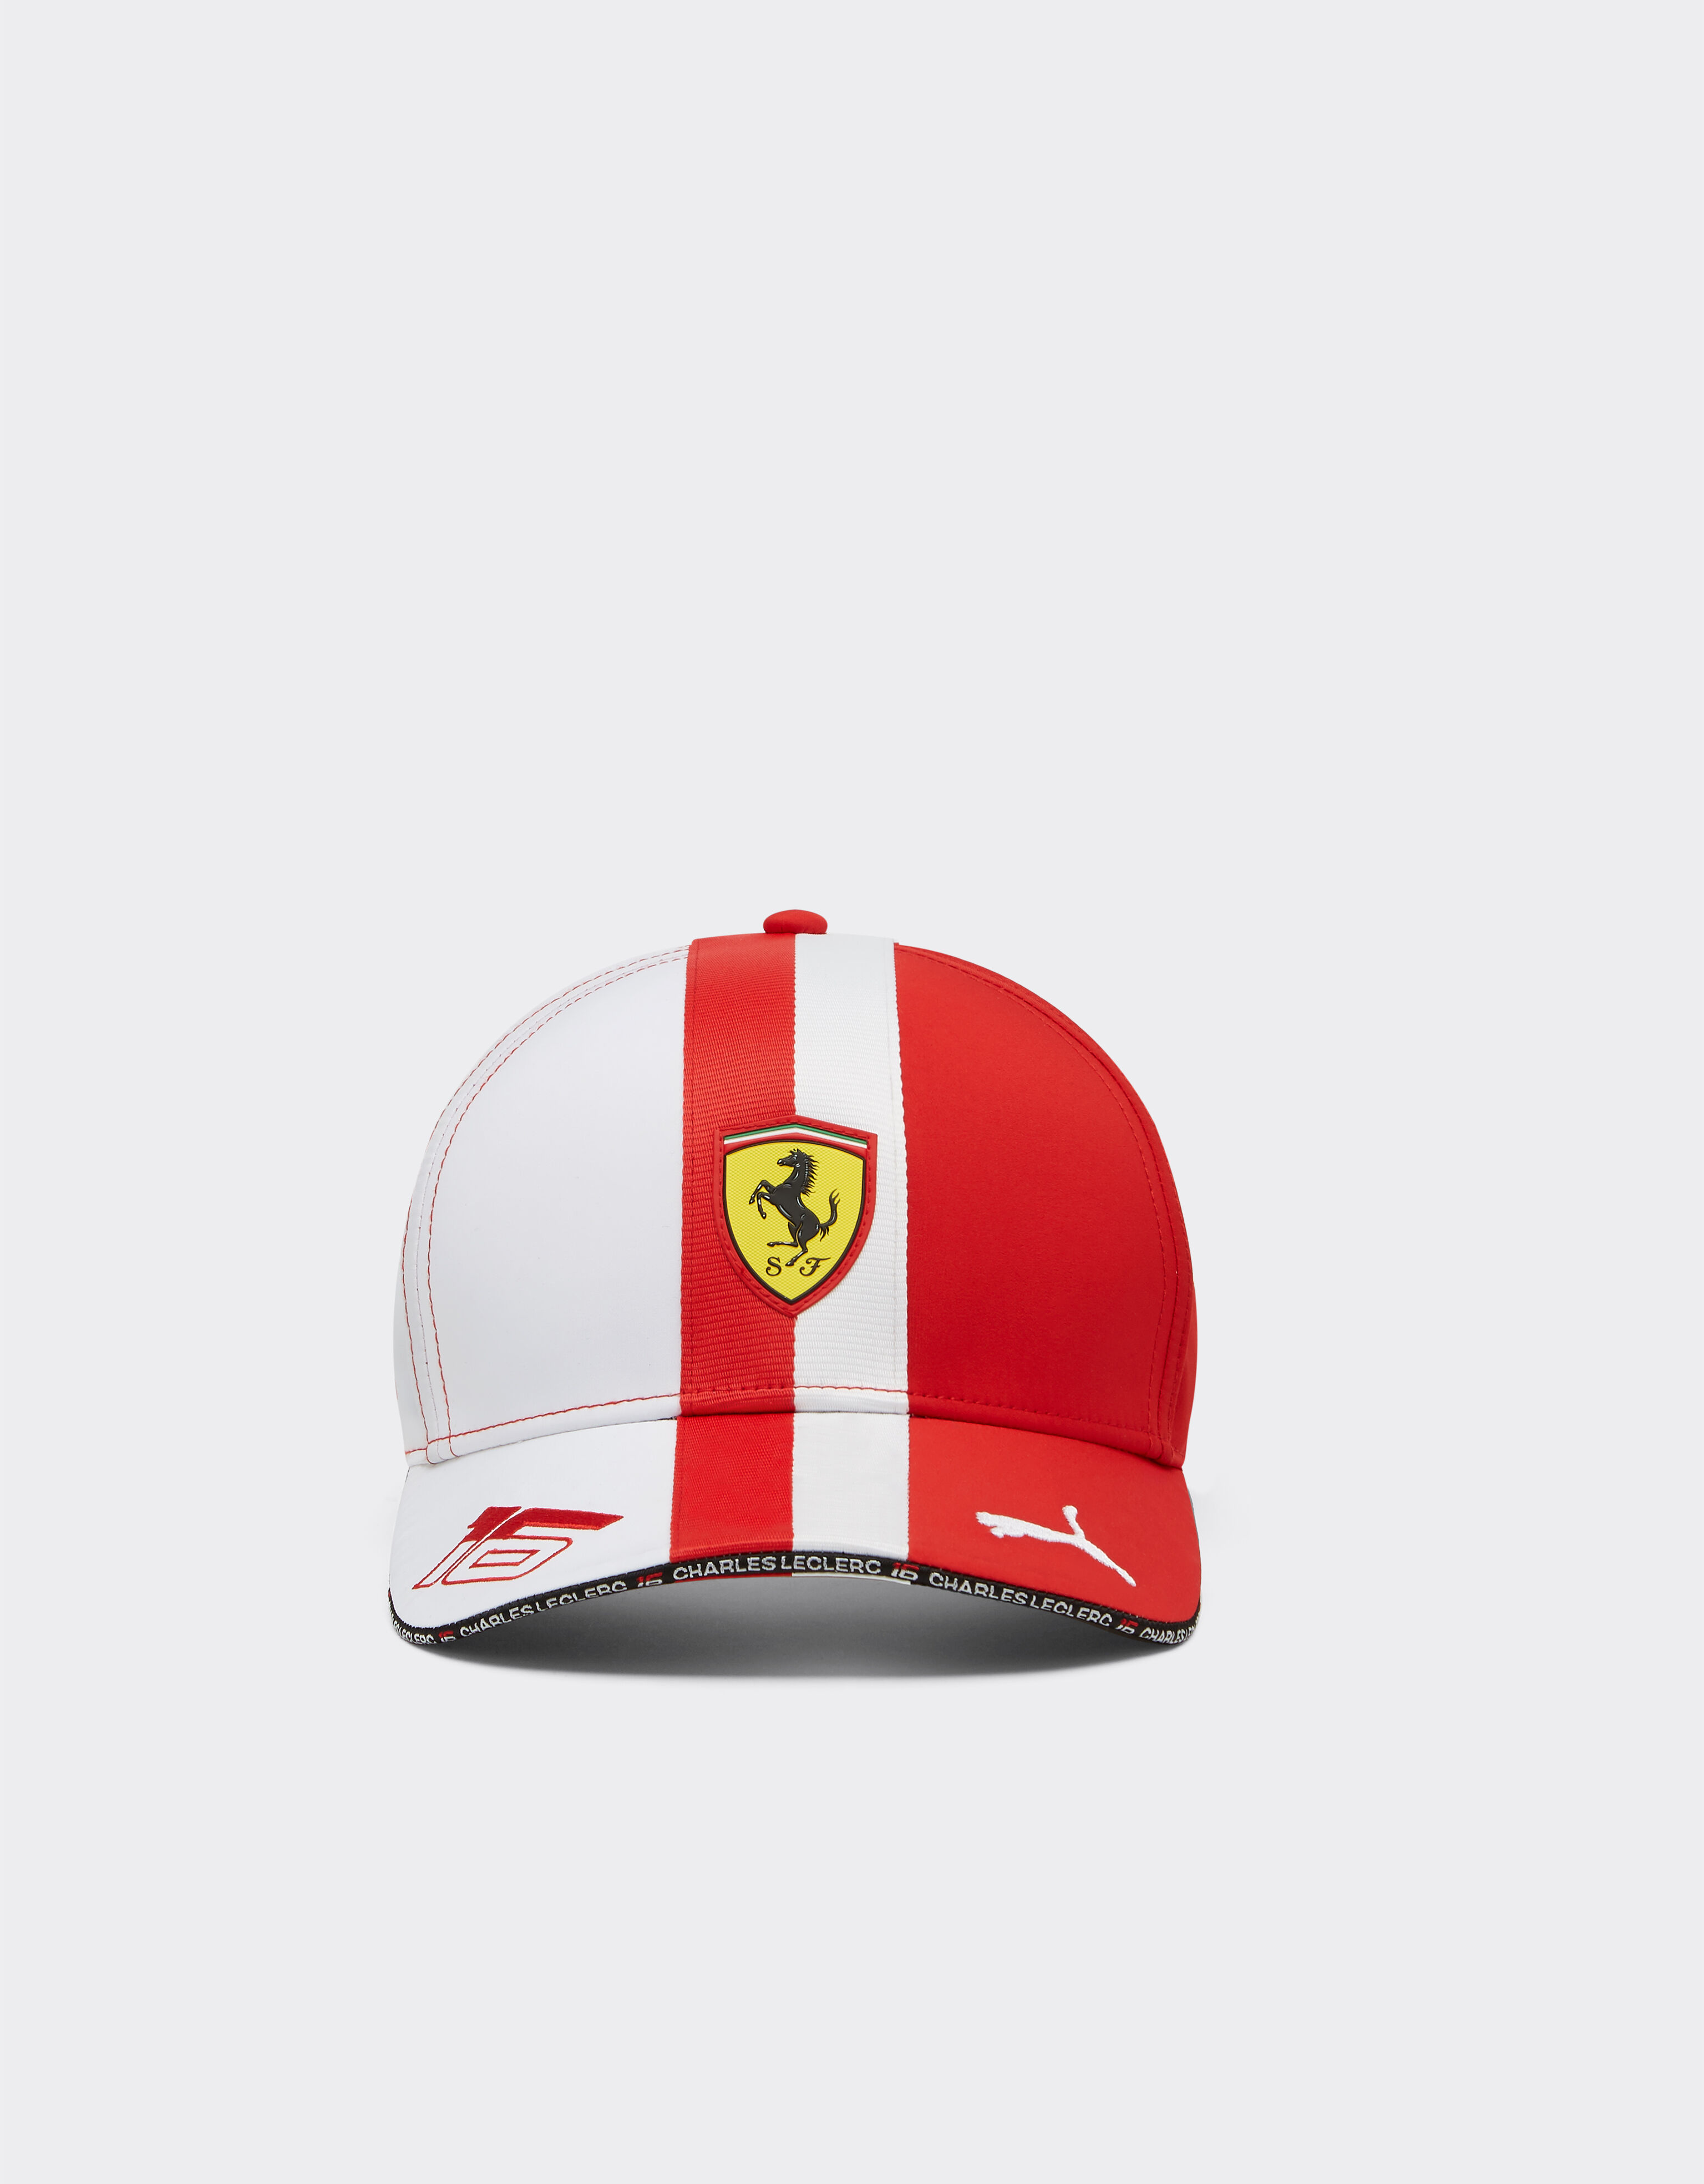 Ferrari Puma for Scuderia Ferrari Leclerc hat - Monaco Special Edition Rouge F1348f